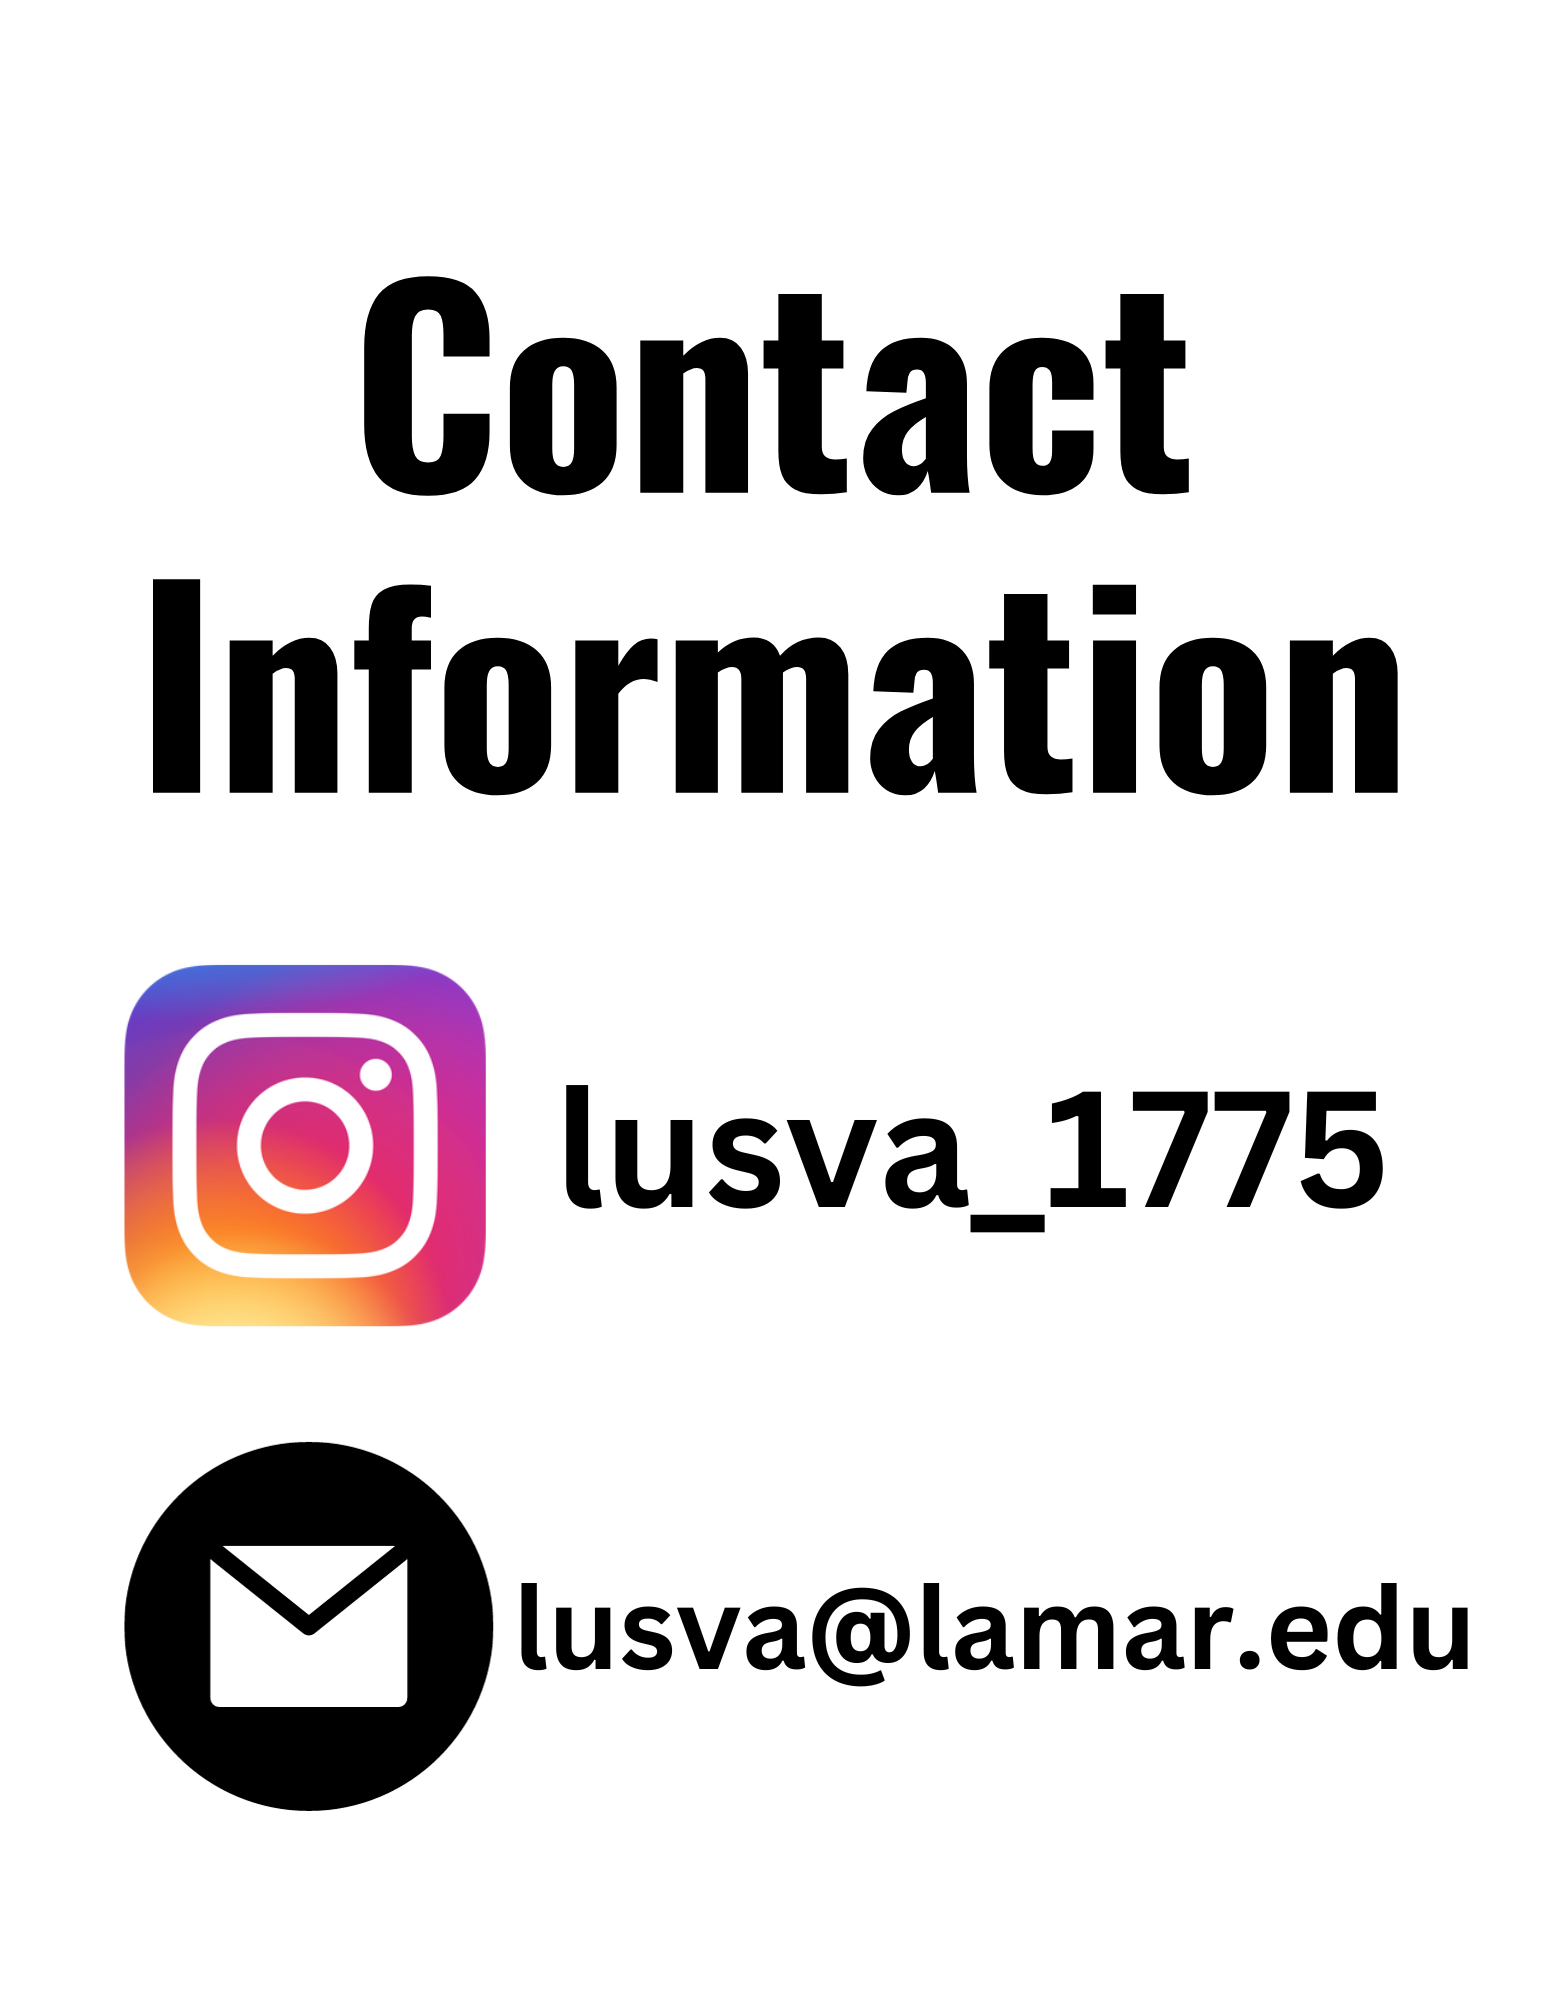 Contact information for the Lamar University Student Veterans Organization 